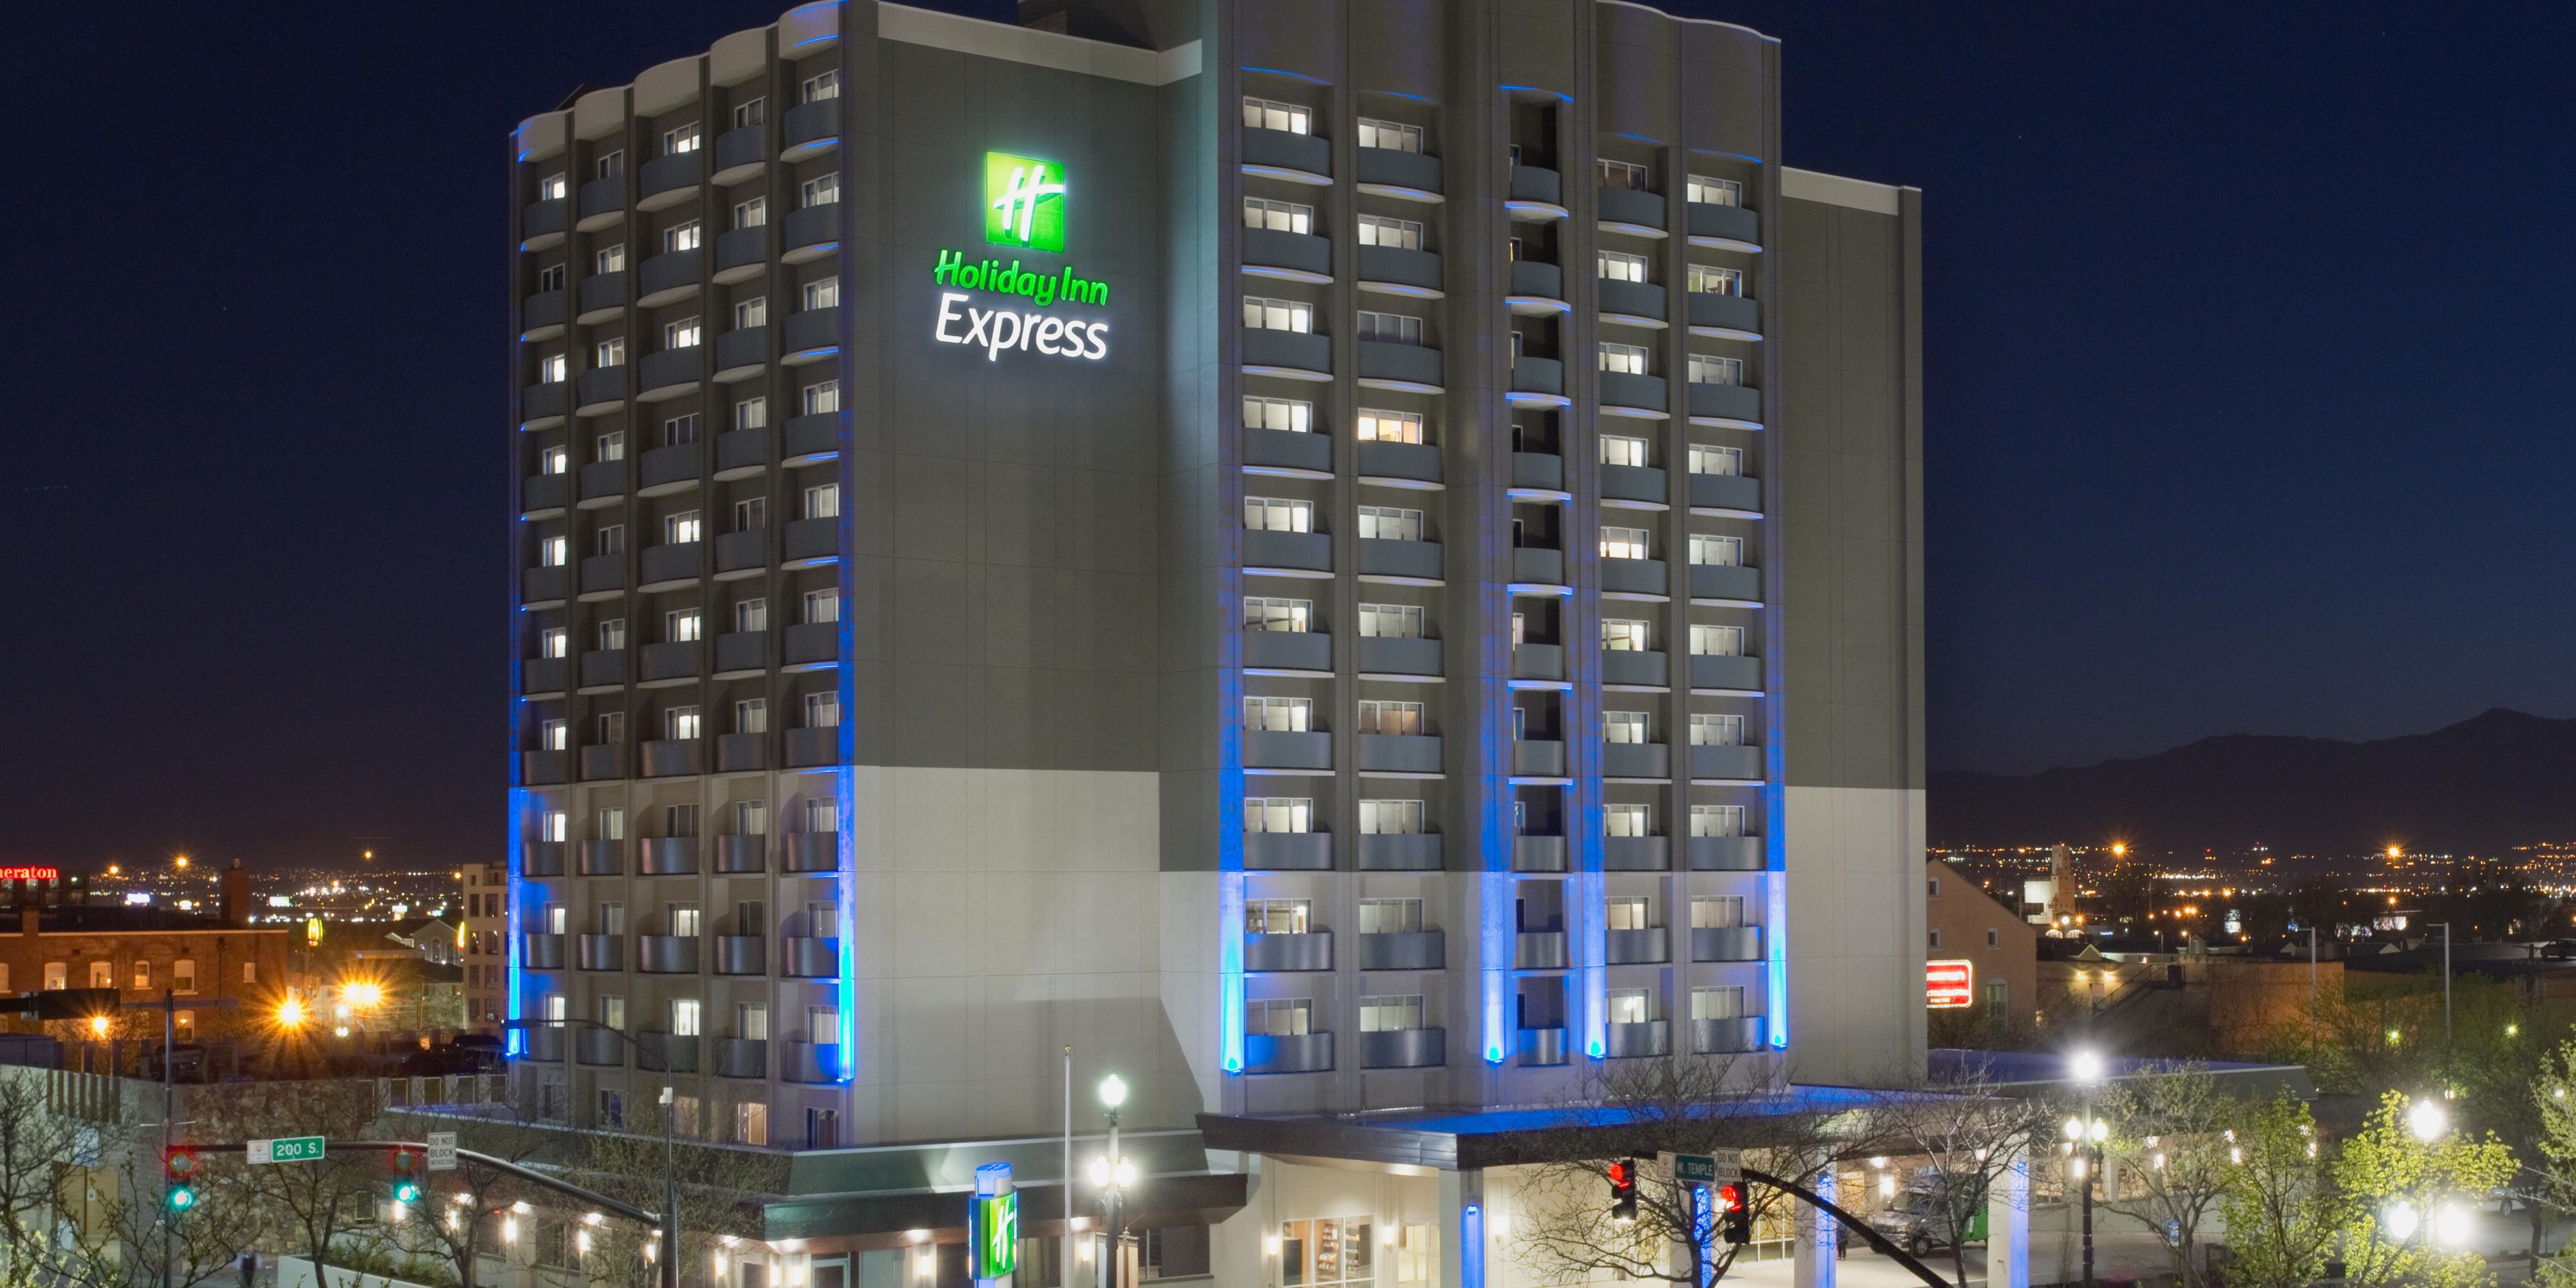 Photo of Holiday Inn Express Salt Lake City Downtown, Salt Lake City, UT